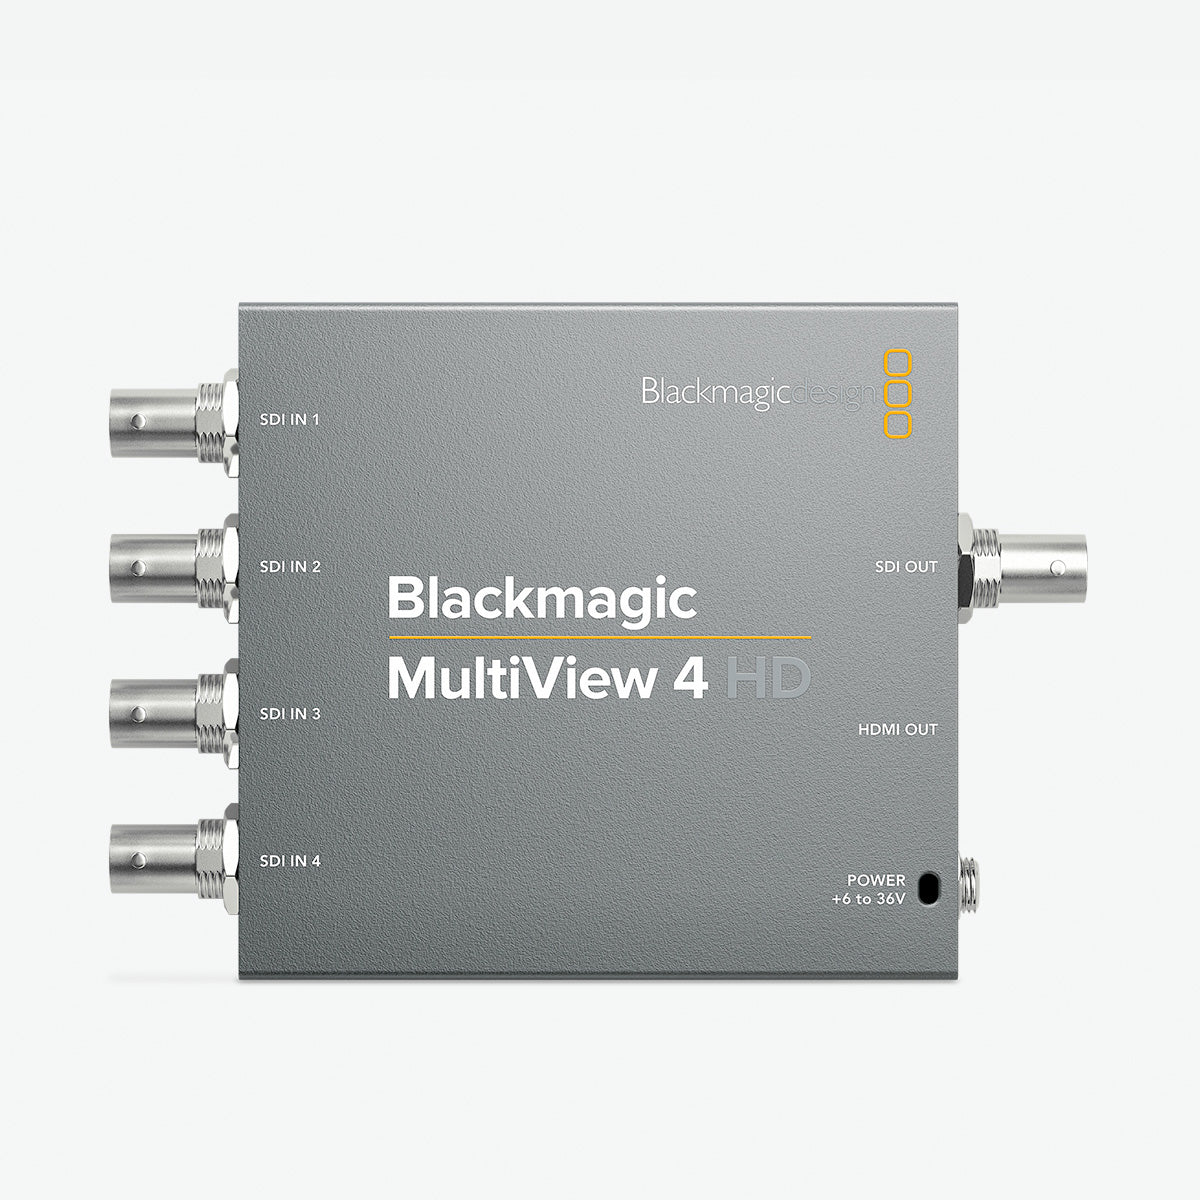 Blackmagic Design(ブラックマジックデザイン) Blackmagic MultiView 4 HD HDL-MULTIP3G/04HD